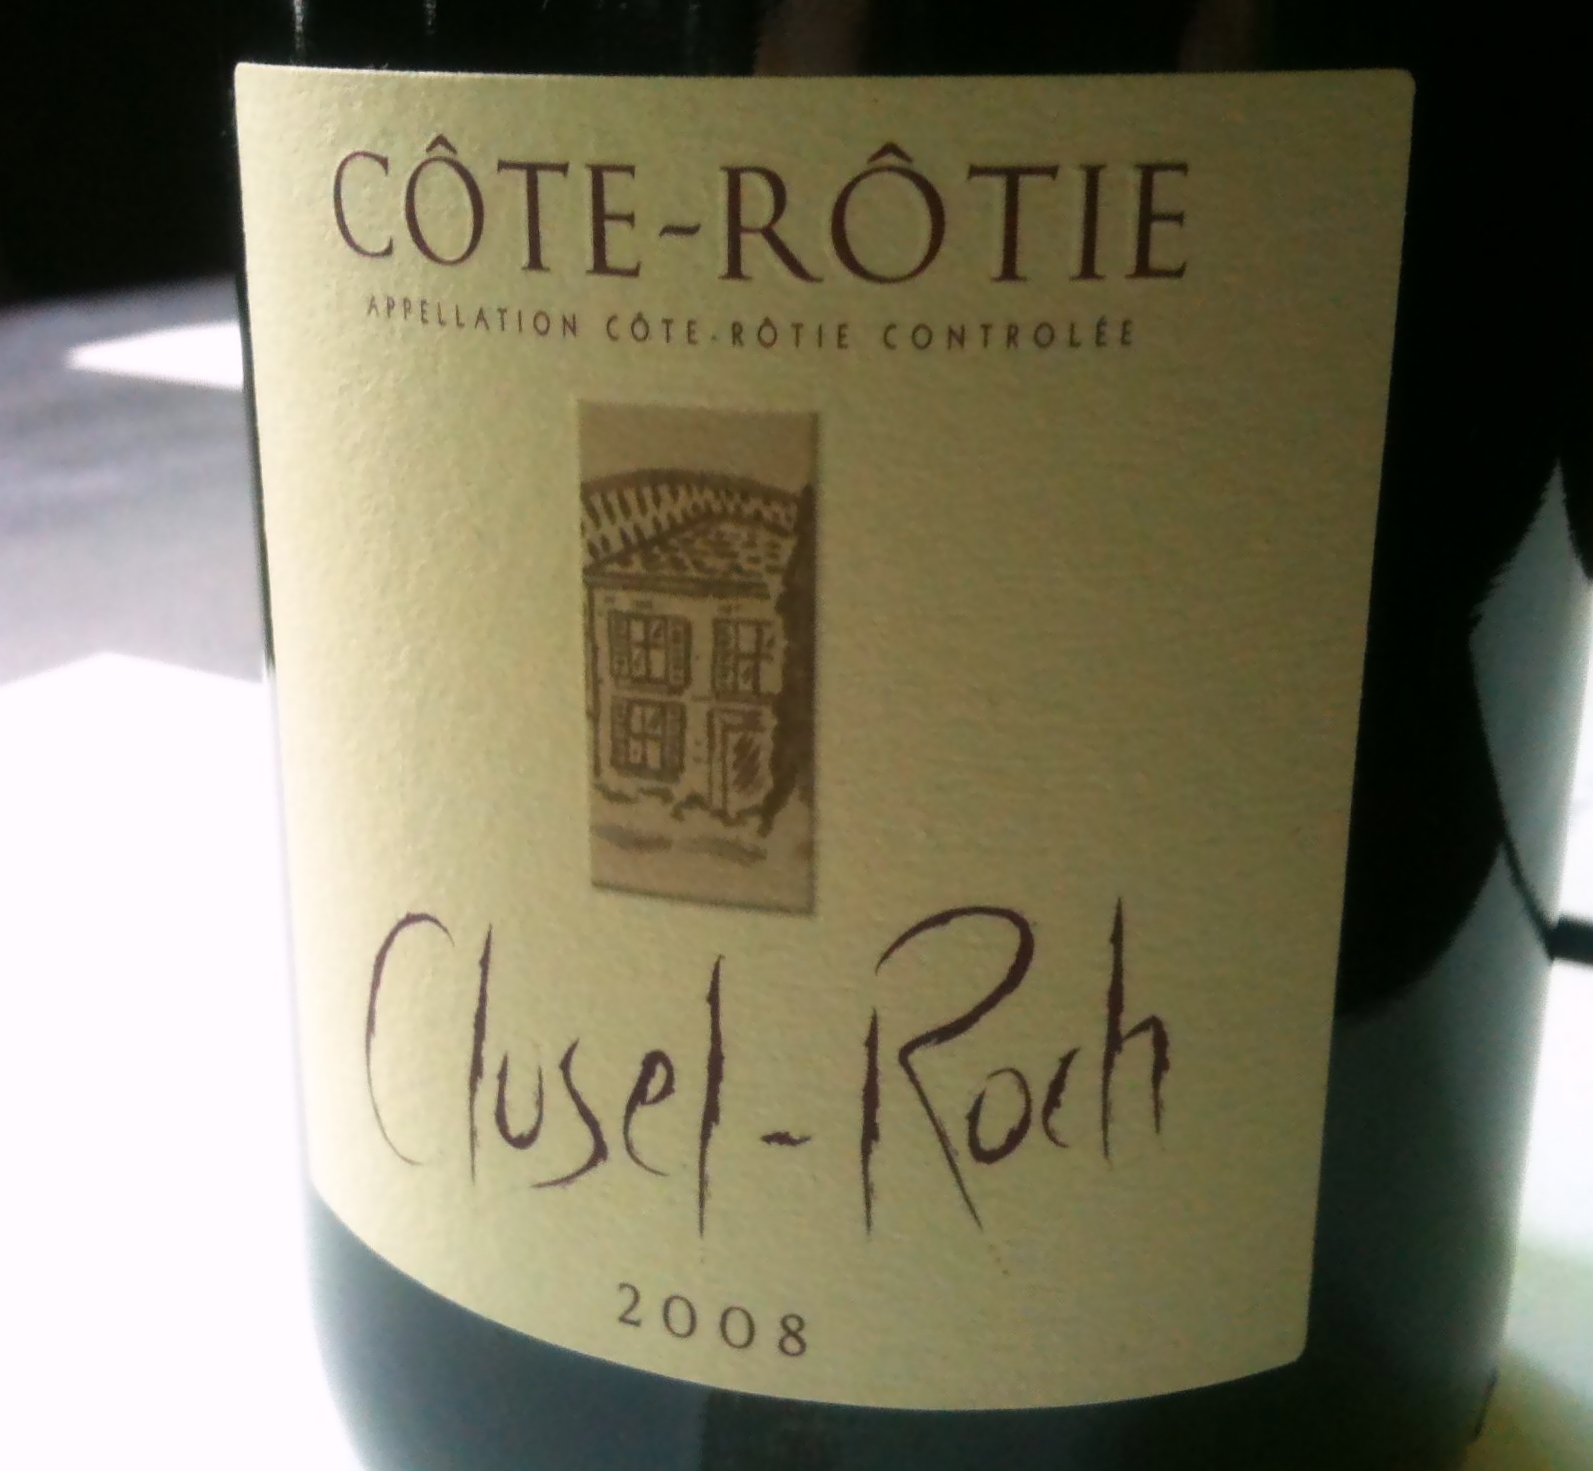 Clusel-Roch Cote-Rotie 2008